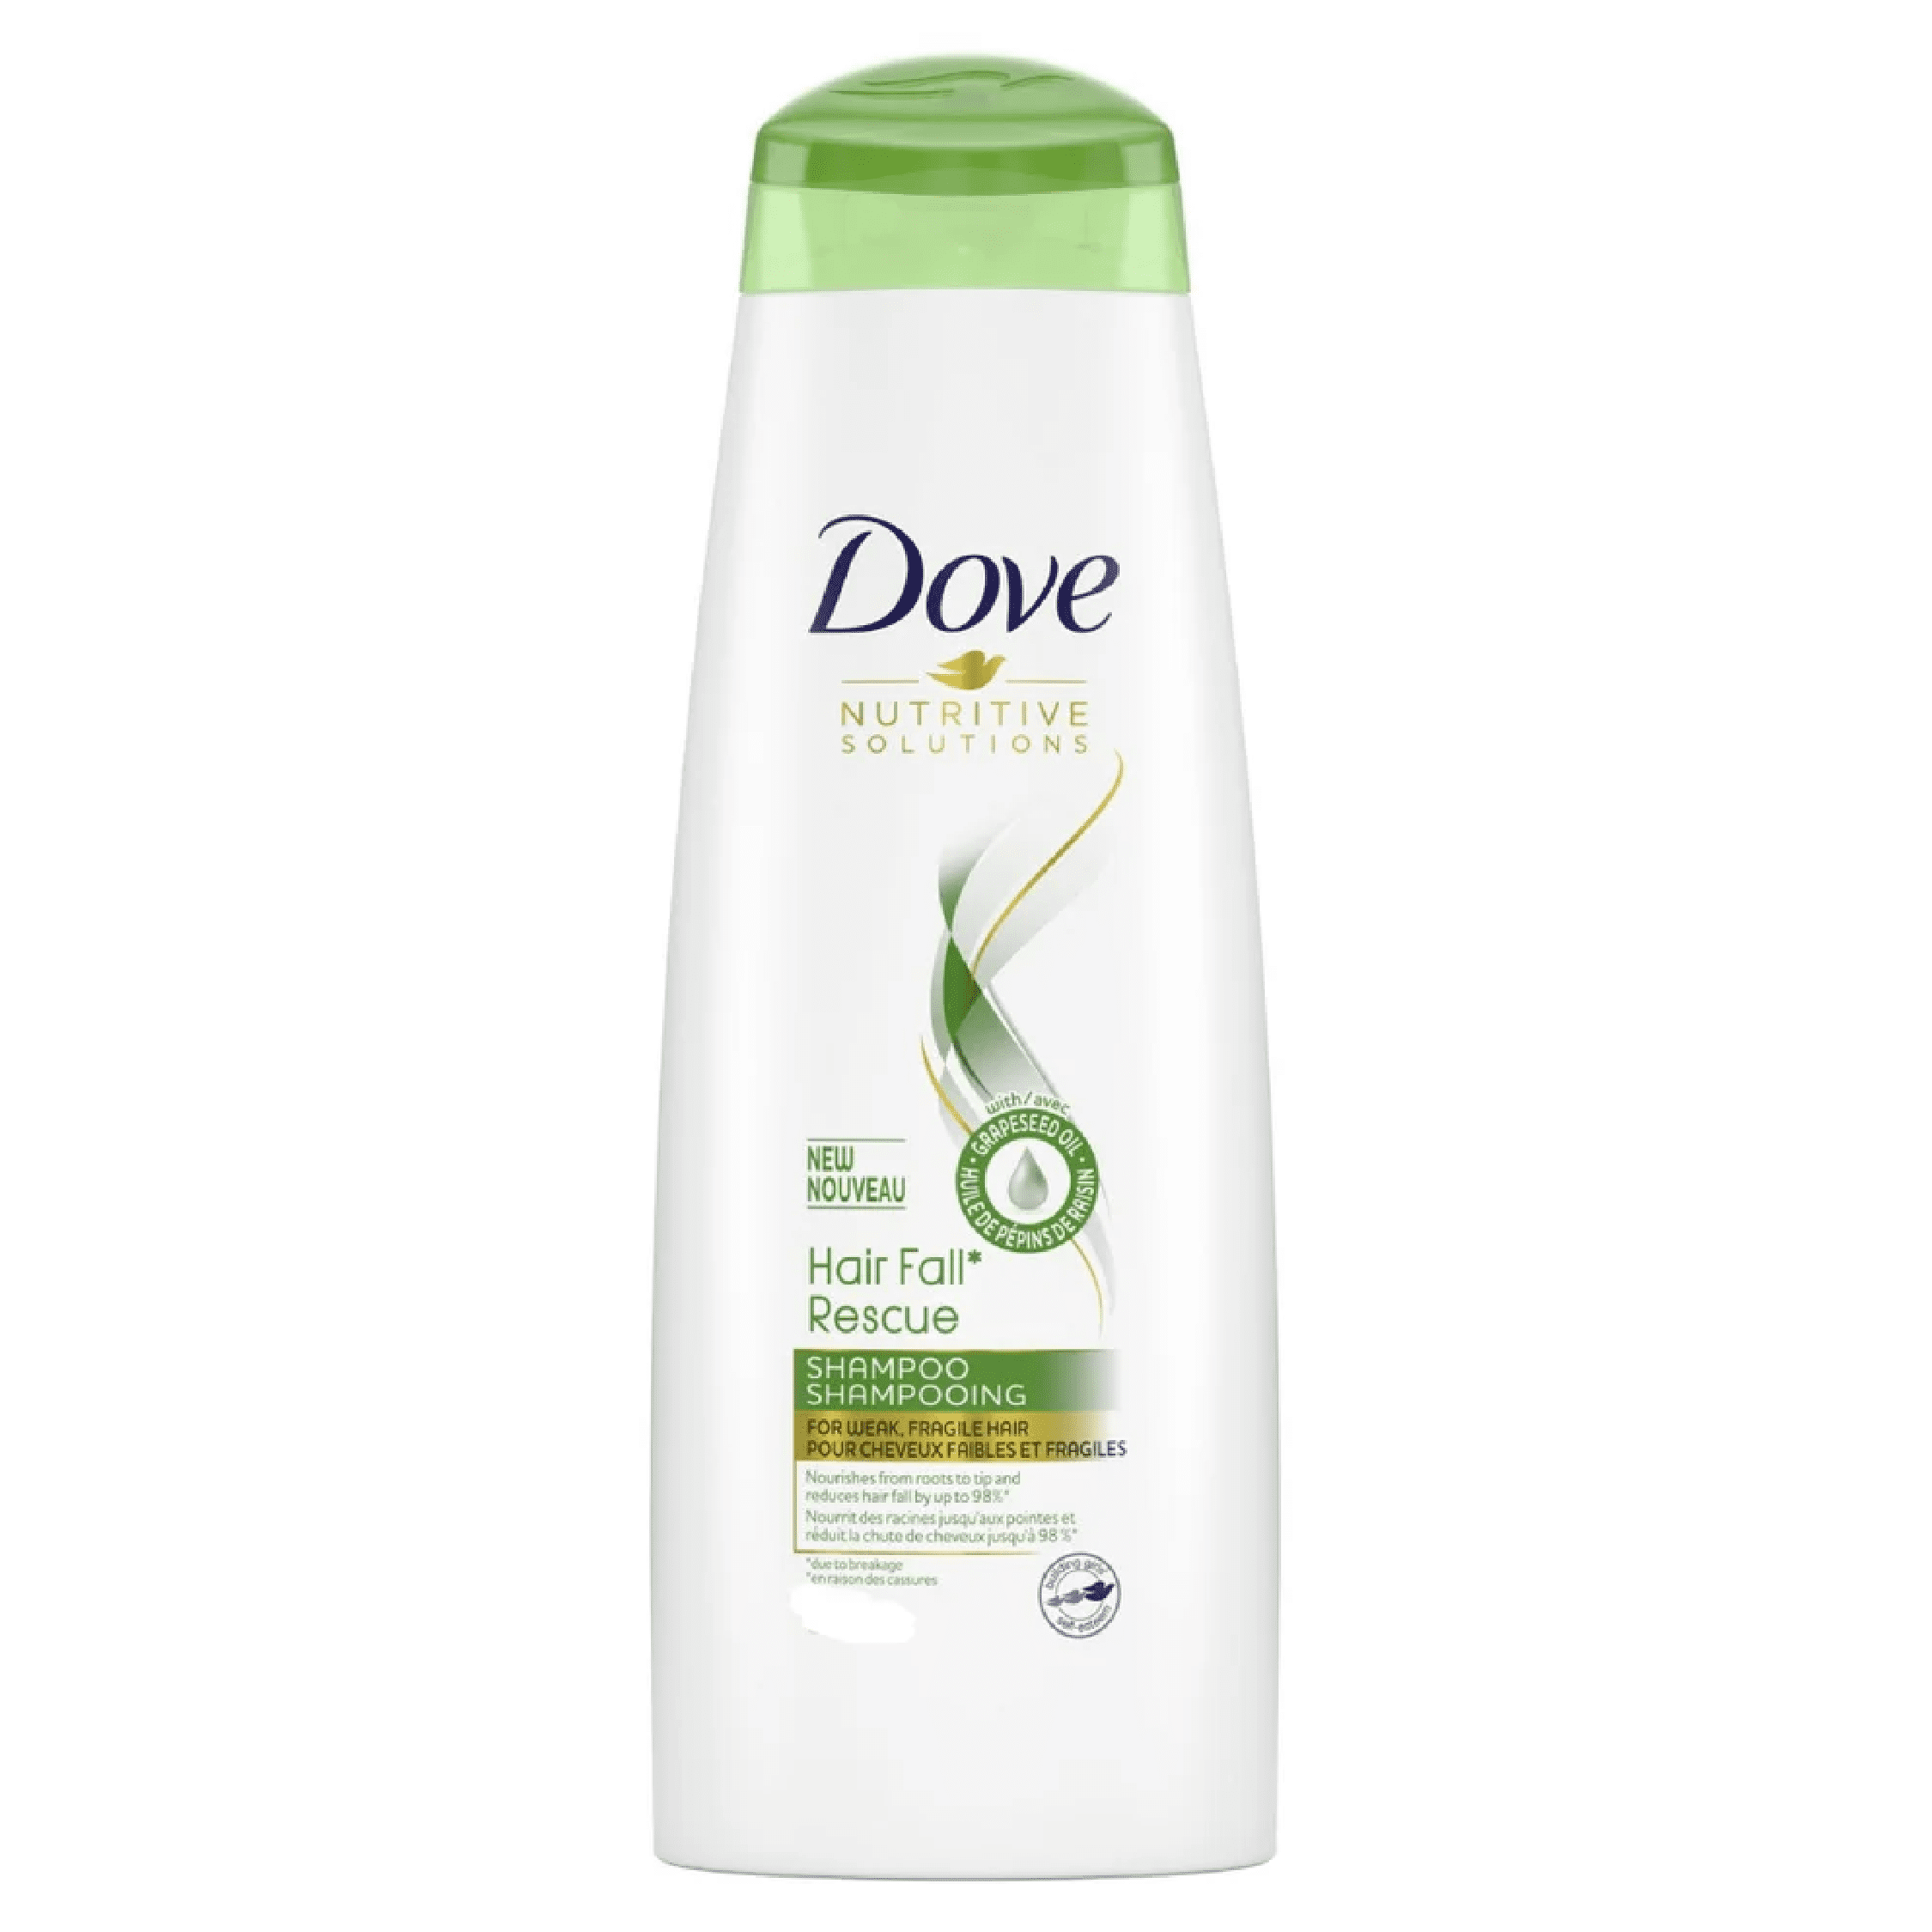 Intim Identificere udmelding Dove Nutritive Solutions Hair Fall Rescue Shampoo, 13.5oz, 400ml, 1 Pack -  Walmart.com